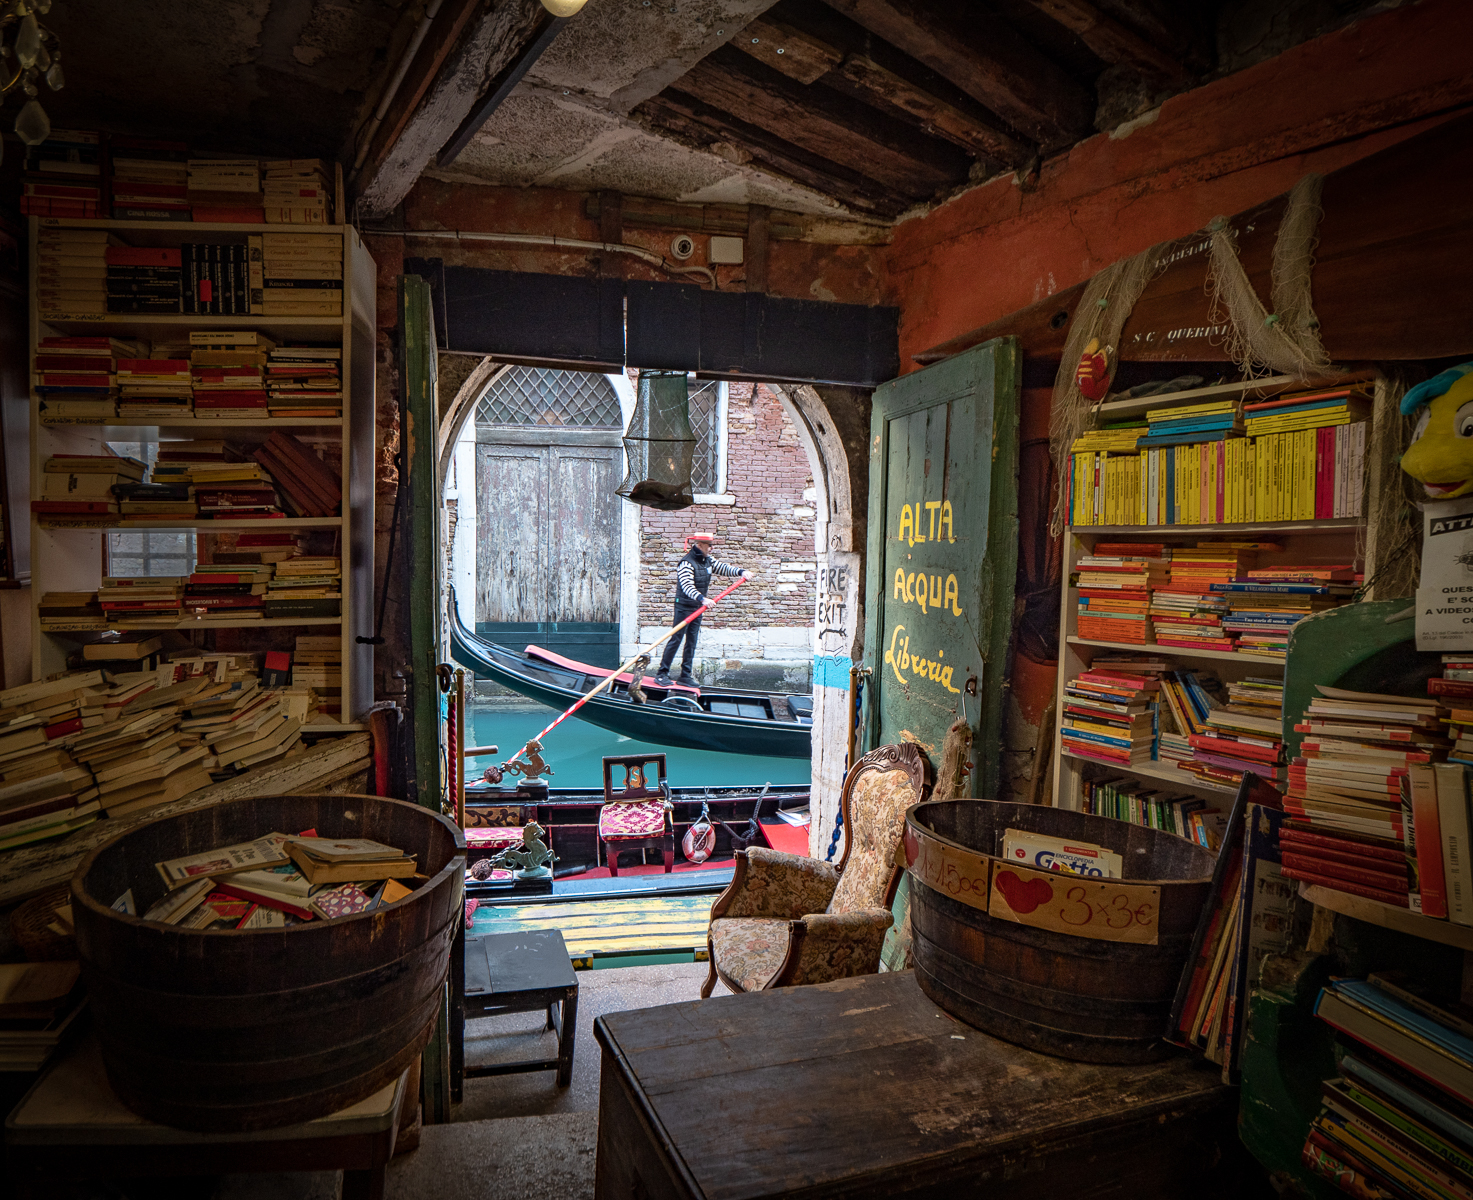 Old Bookstore in Venice